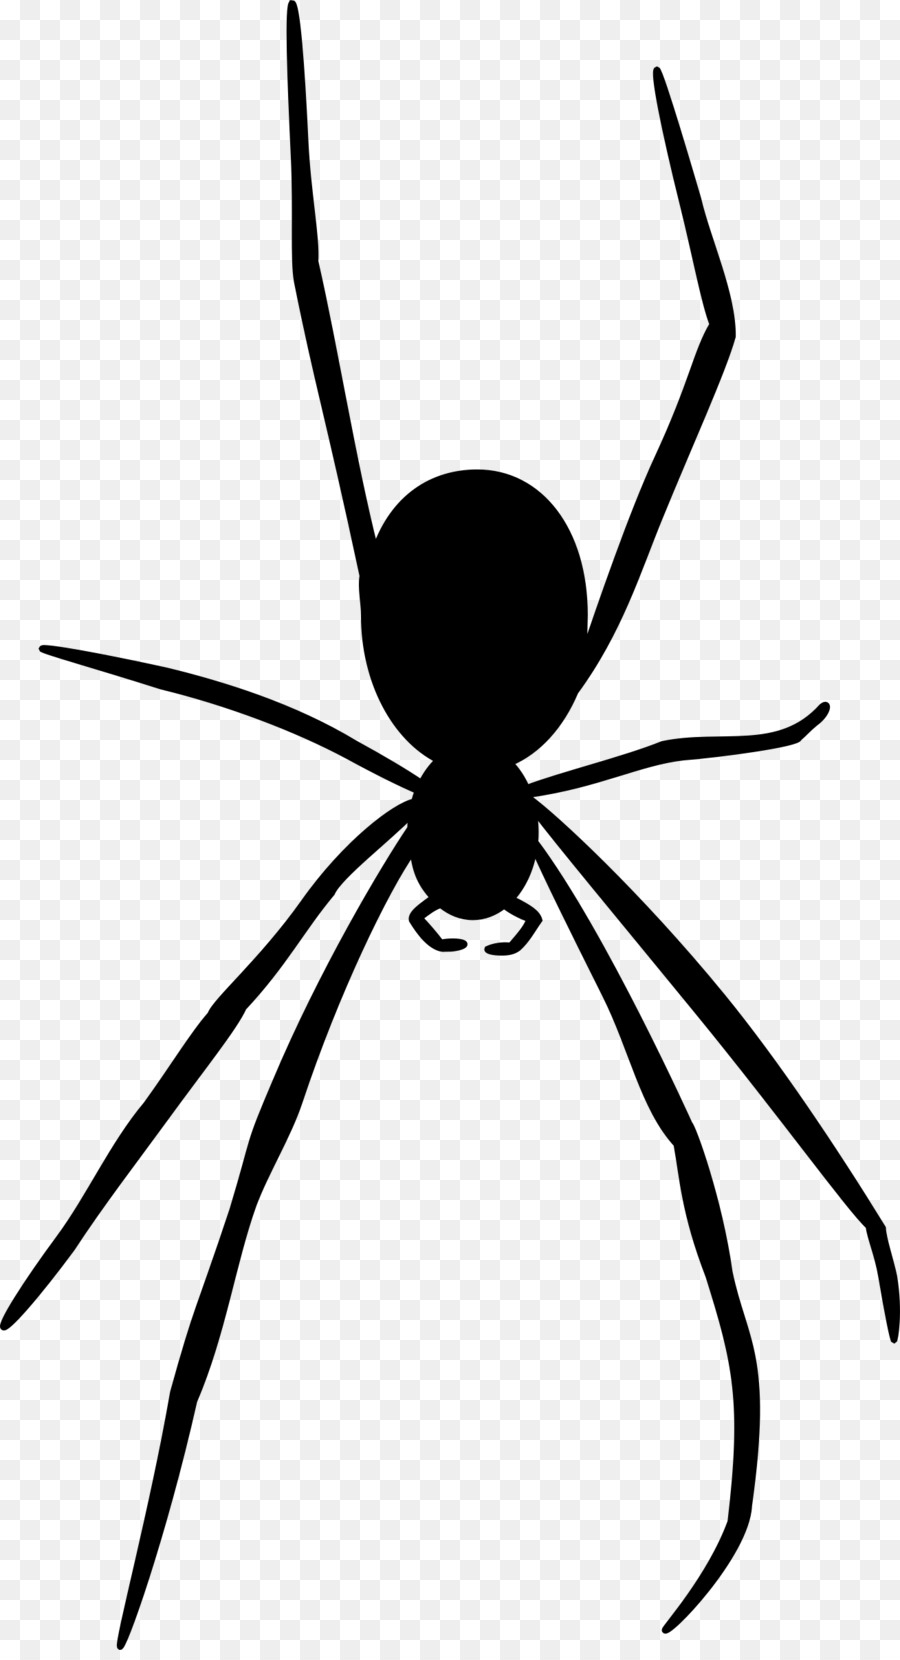 Spider web Silhouette Clip art - spider web png download - 1309*2400 - Free Transparent Spider png Download.